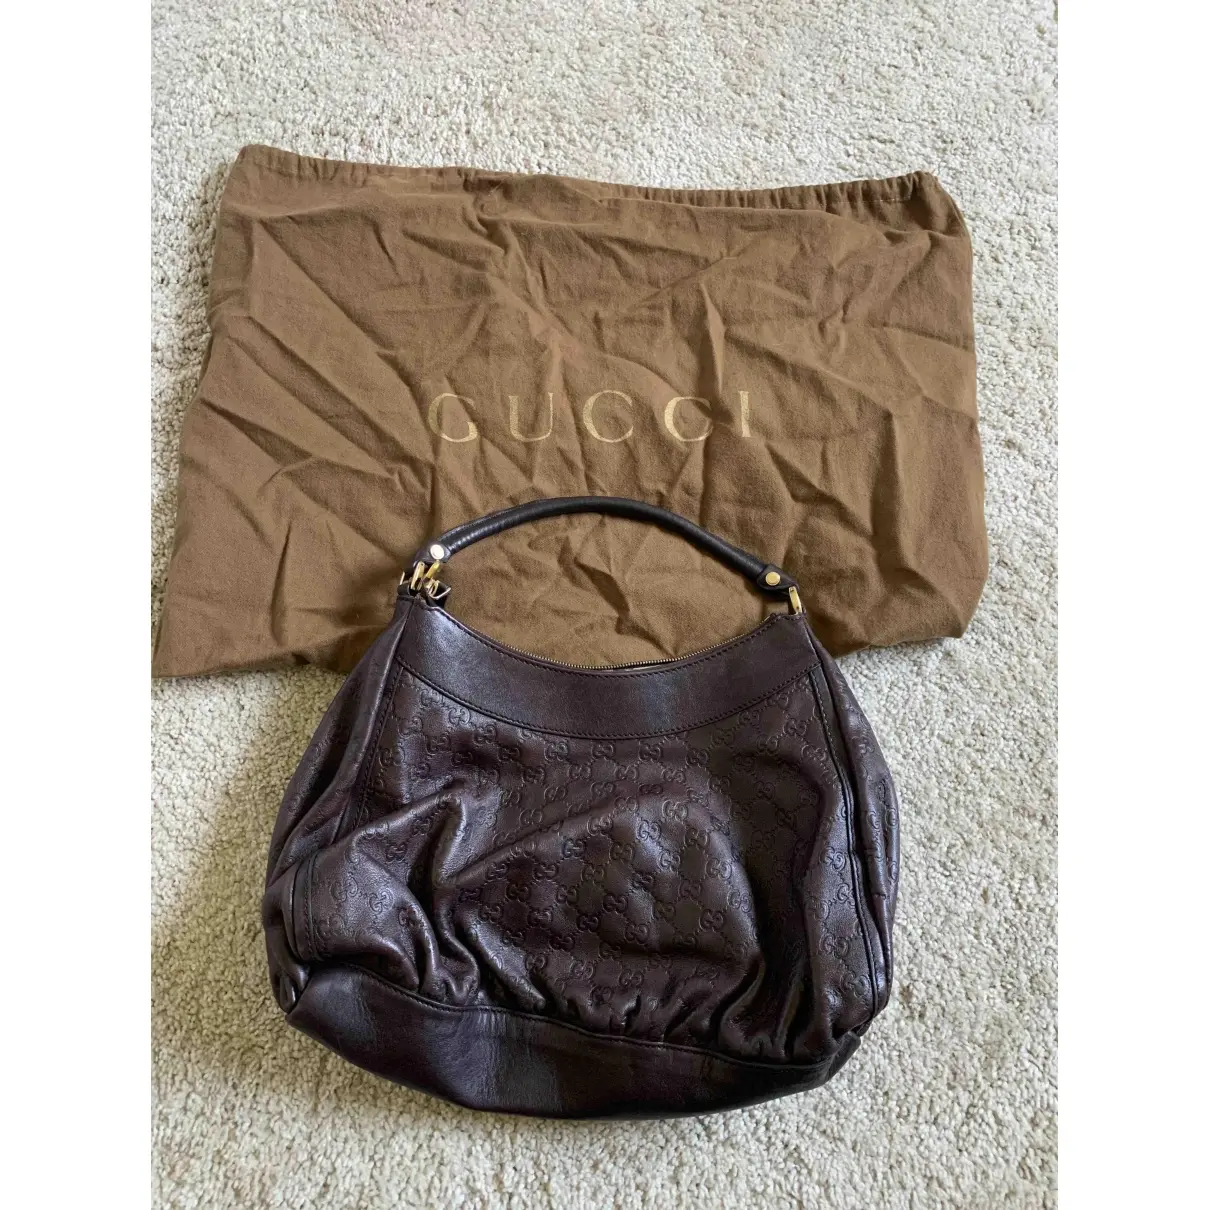 Gucci Sukey leather handbag for sale - Vintage